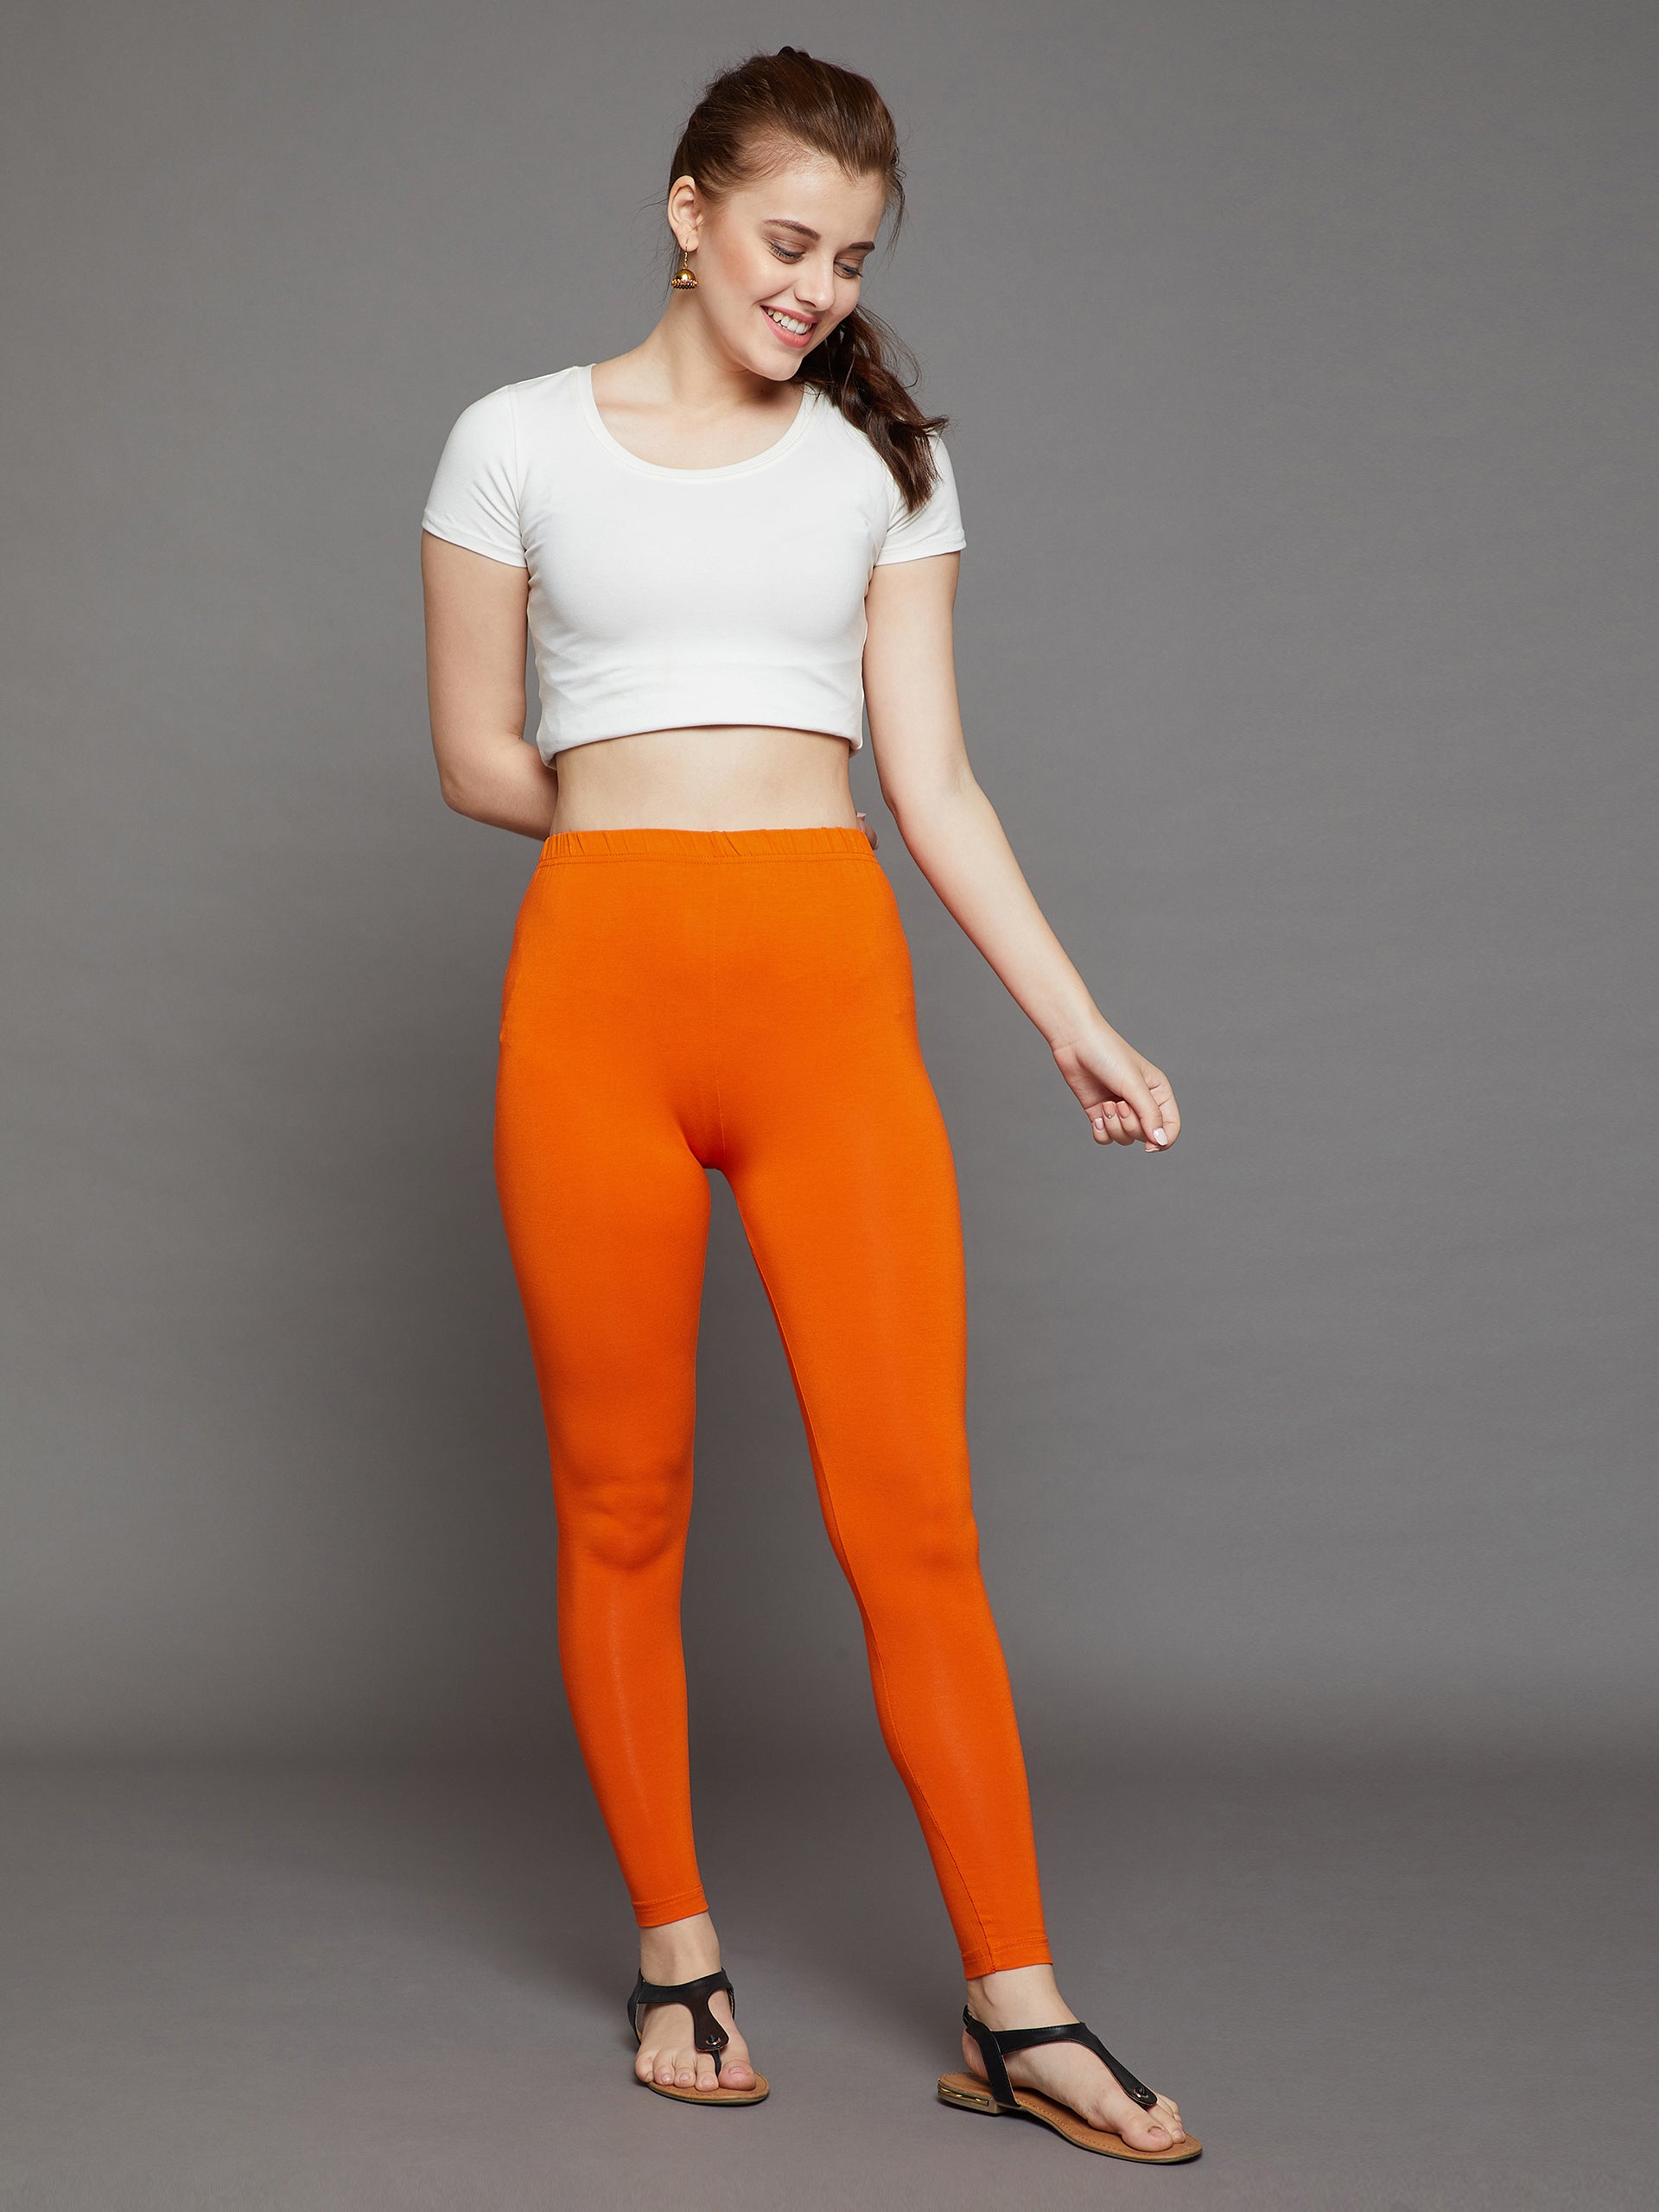 Buy Morrio Carrot Orange Cotton Lycra Churidar Legging,Small for